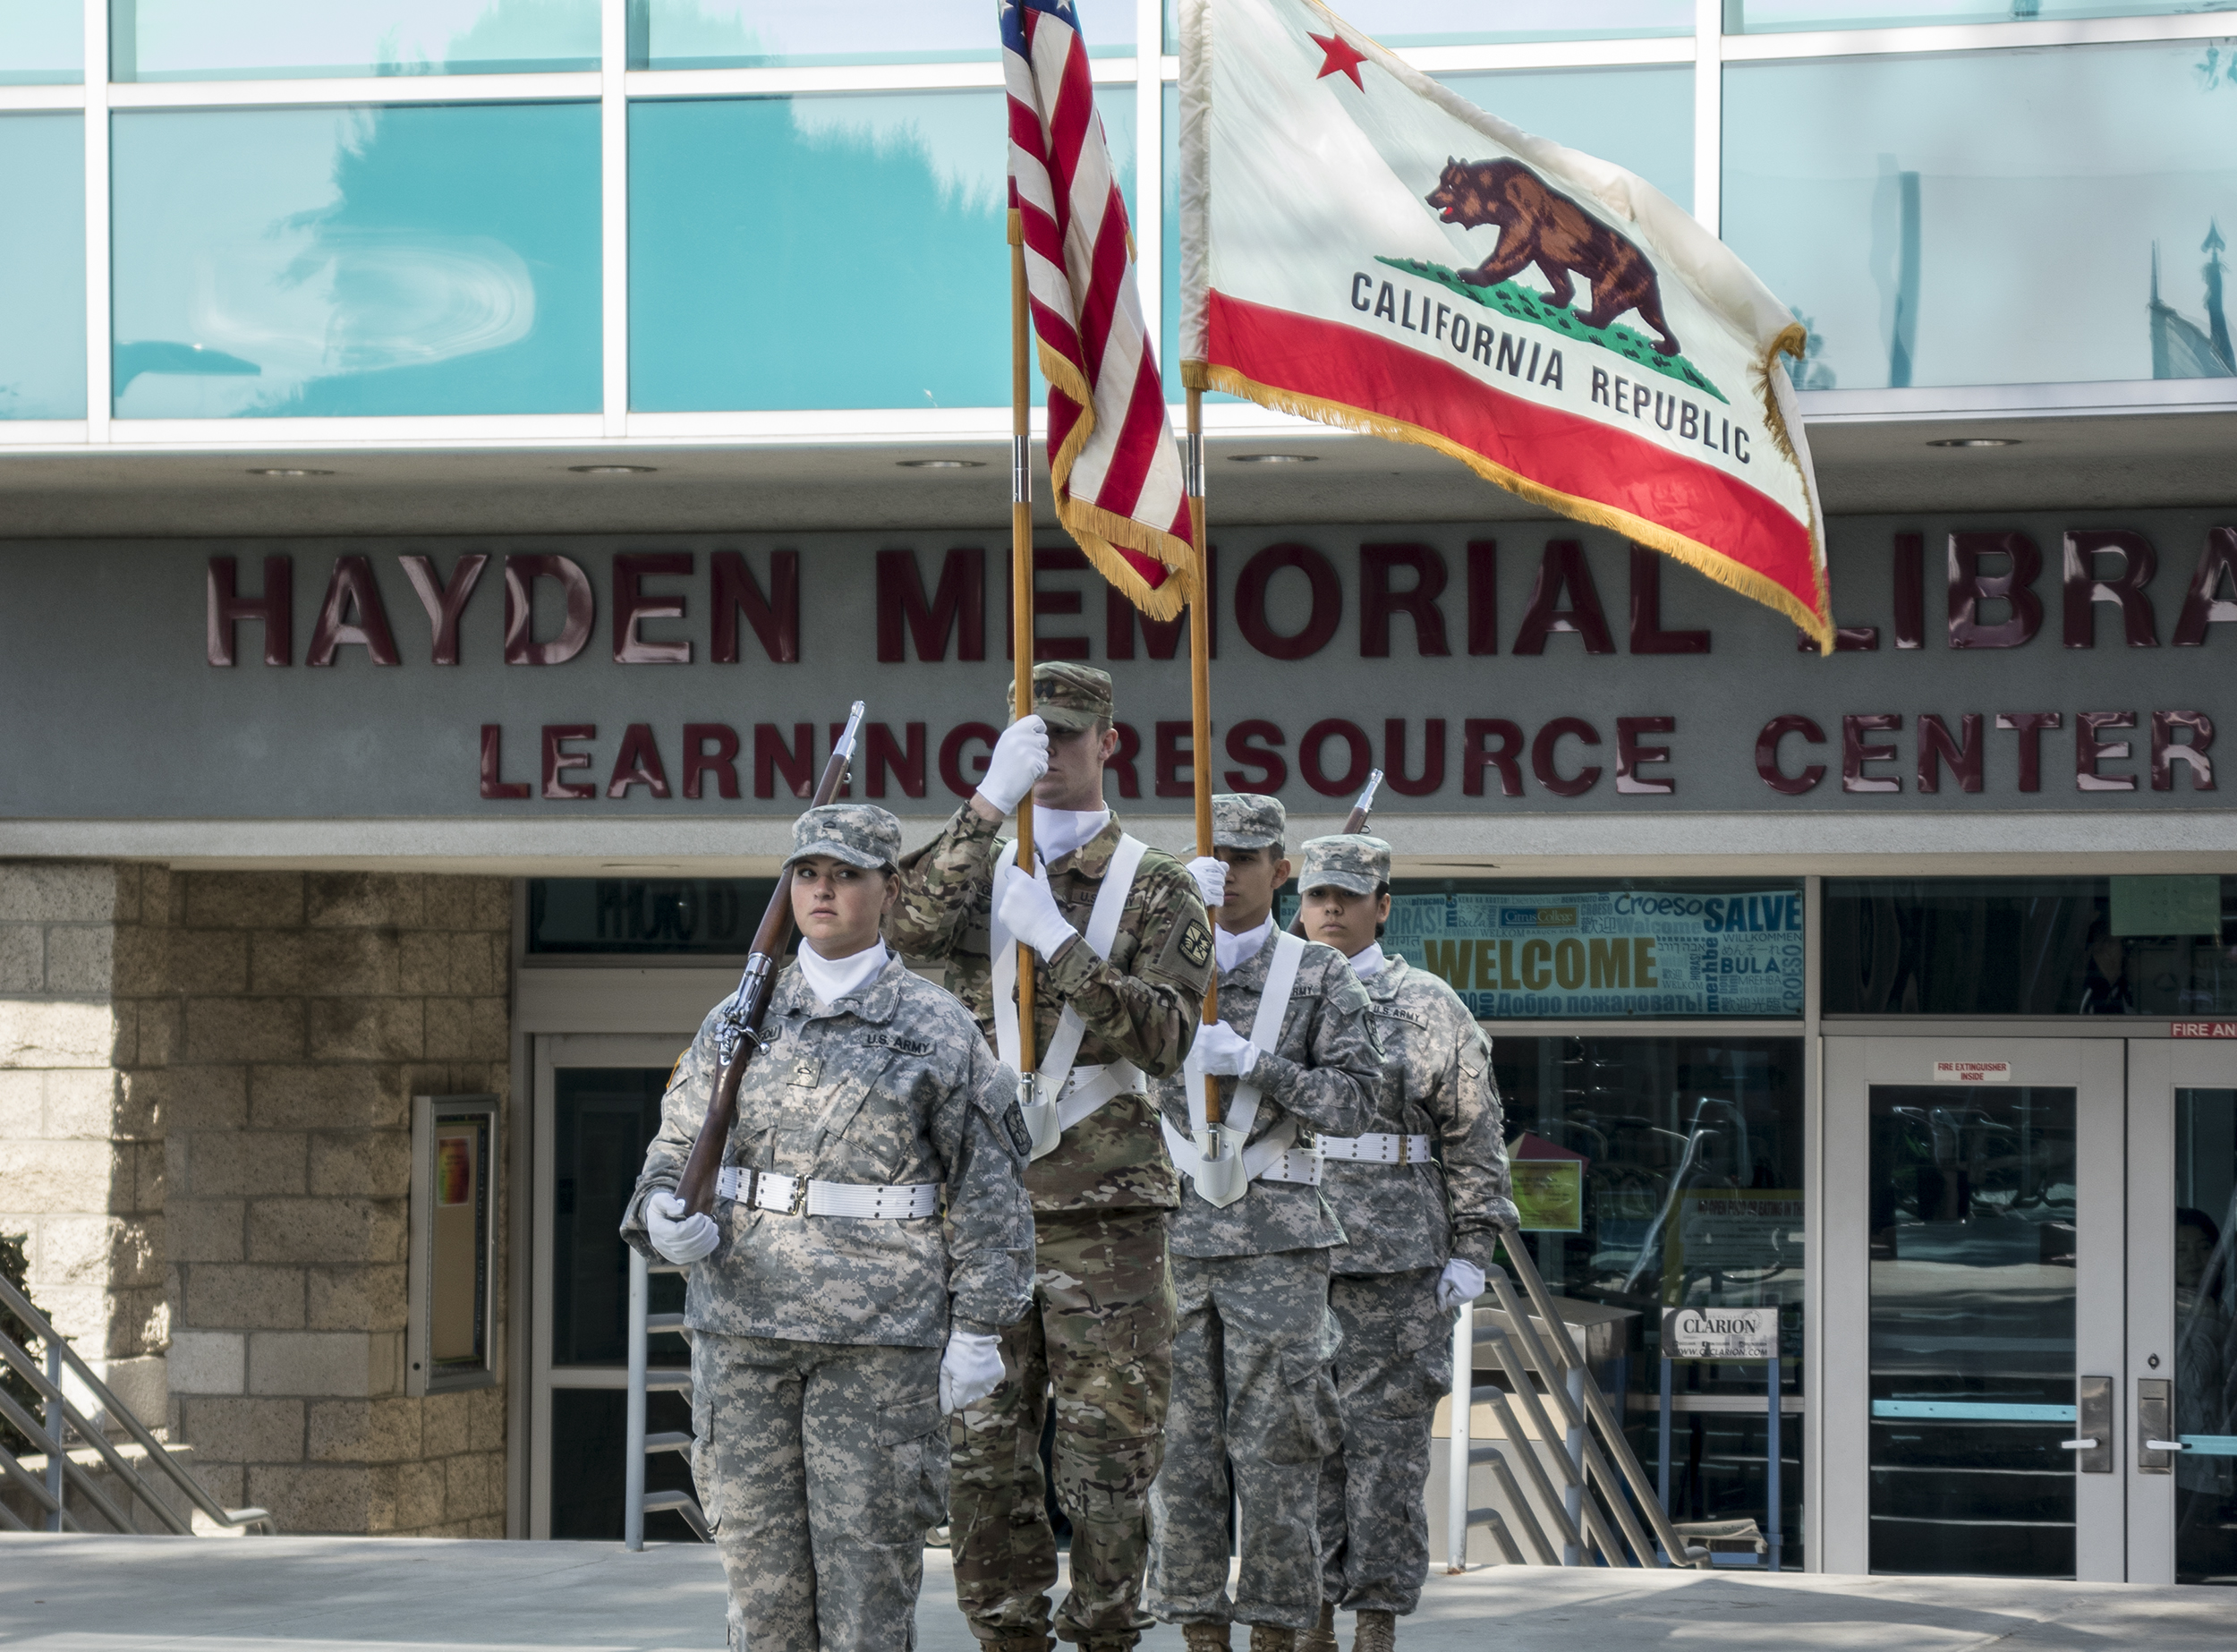 Campus celebrates veterans week by honoring military